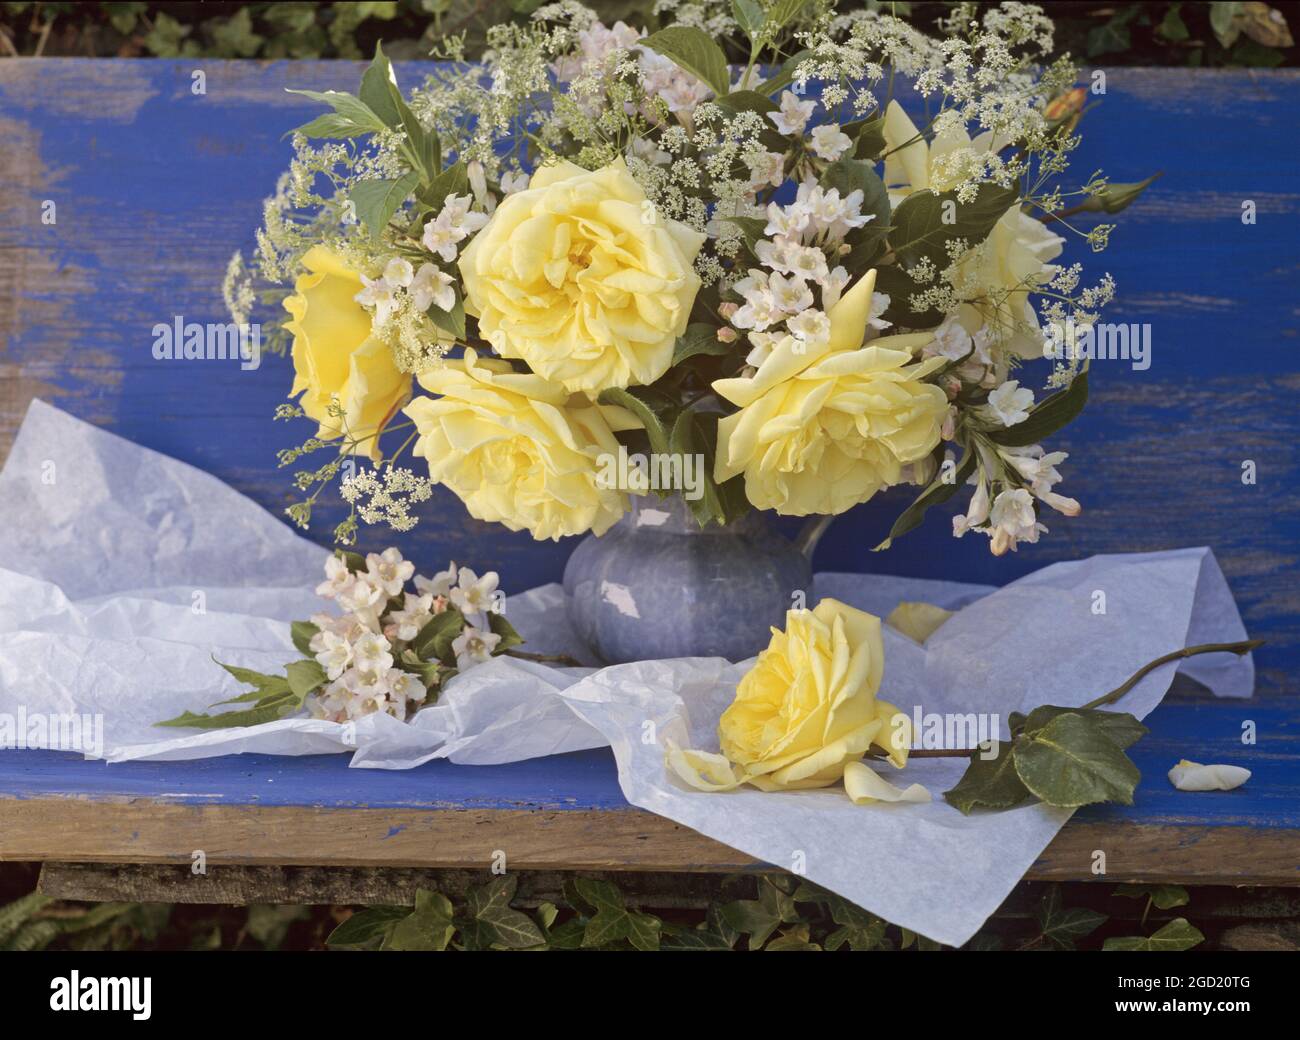 Botanica, rose e weigela su sfondo di legno dipinto di blu, ADDITIONAL-RIGHTS-CLEARANCE-INFO-NOT-AVAILABLE Foto Stock